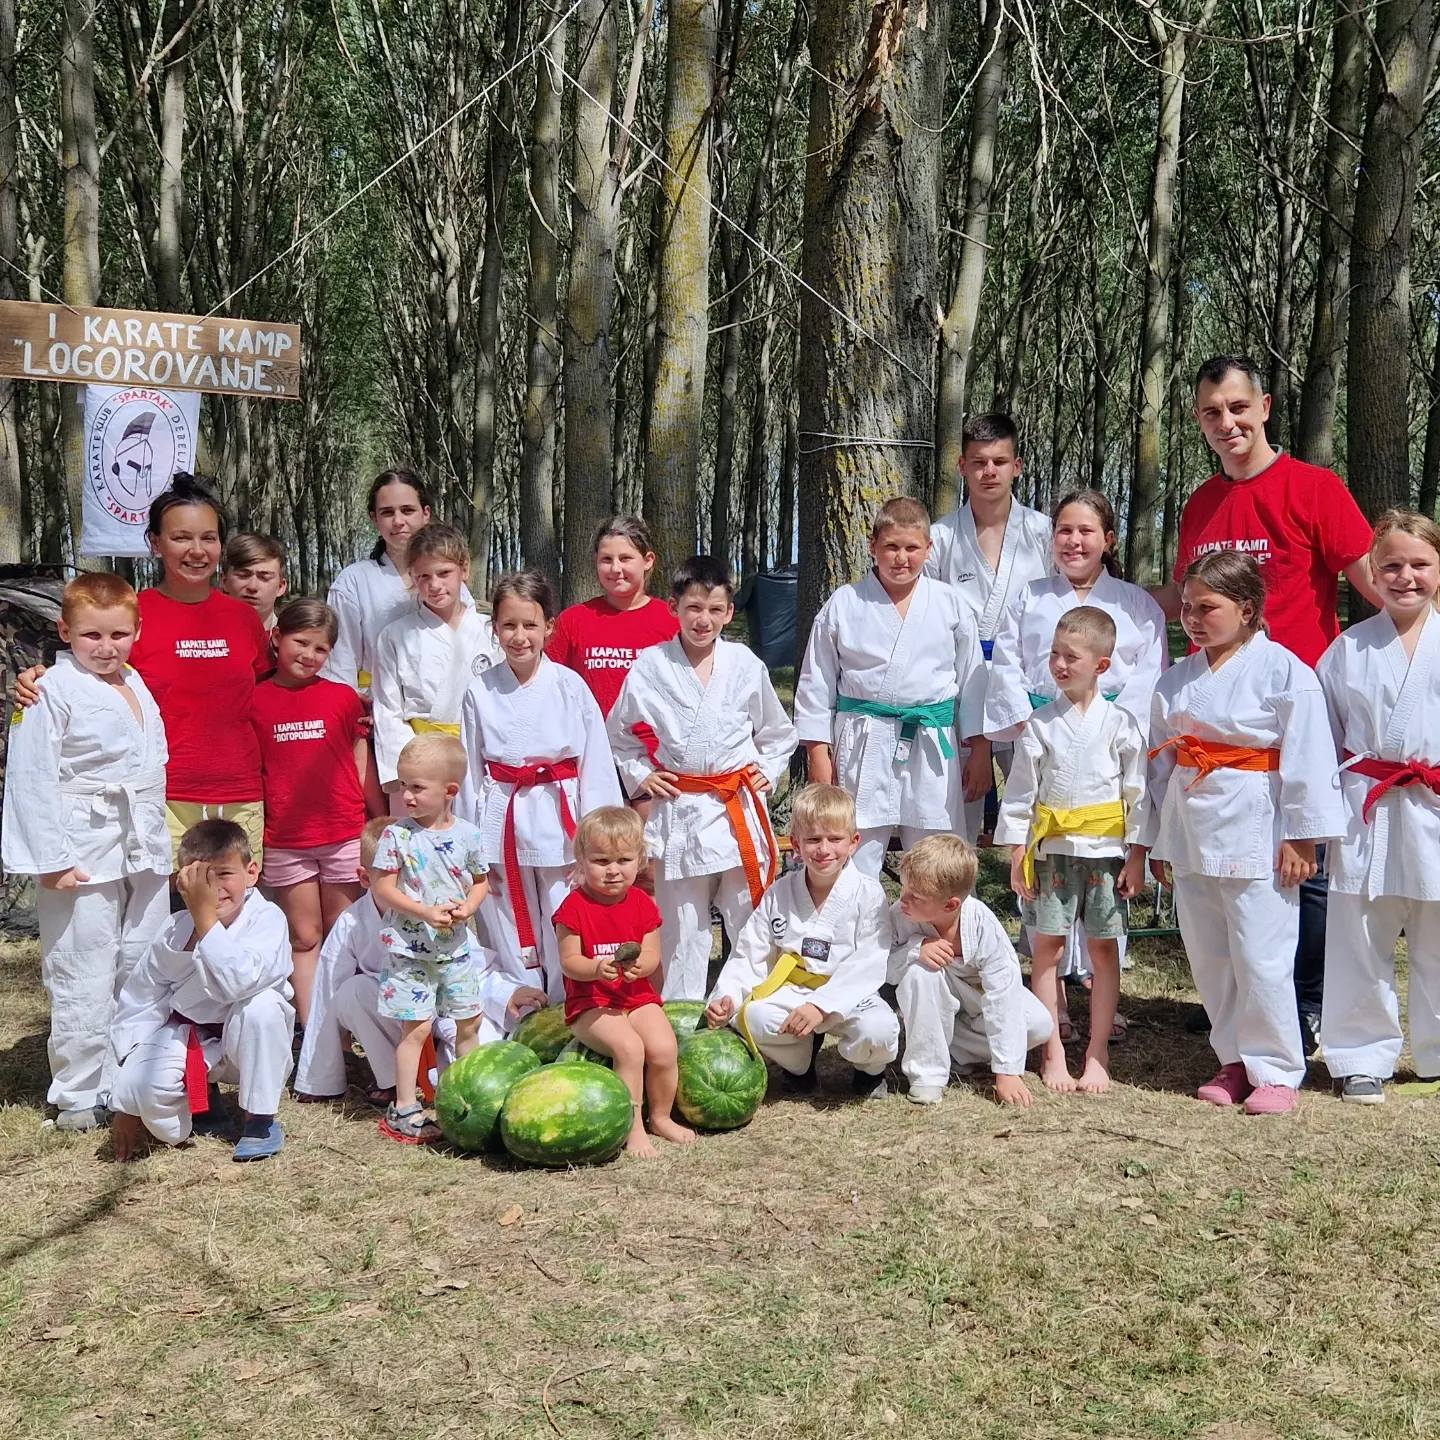 Zamenik predsednika opštine Kovačica posetio prvi logorski kamp Karate kluba "Spartak" iz Debeljače